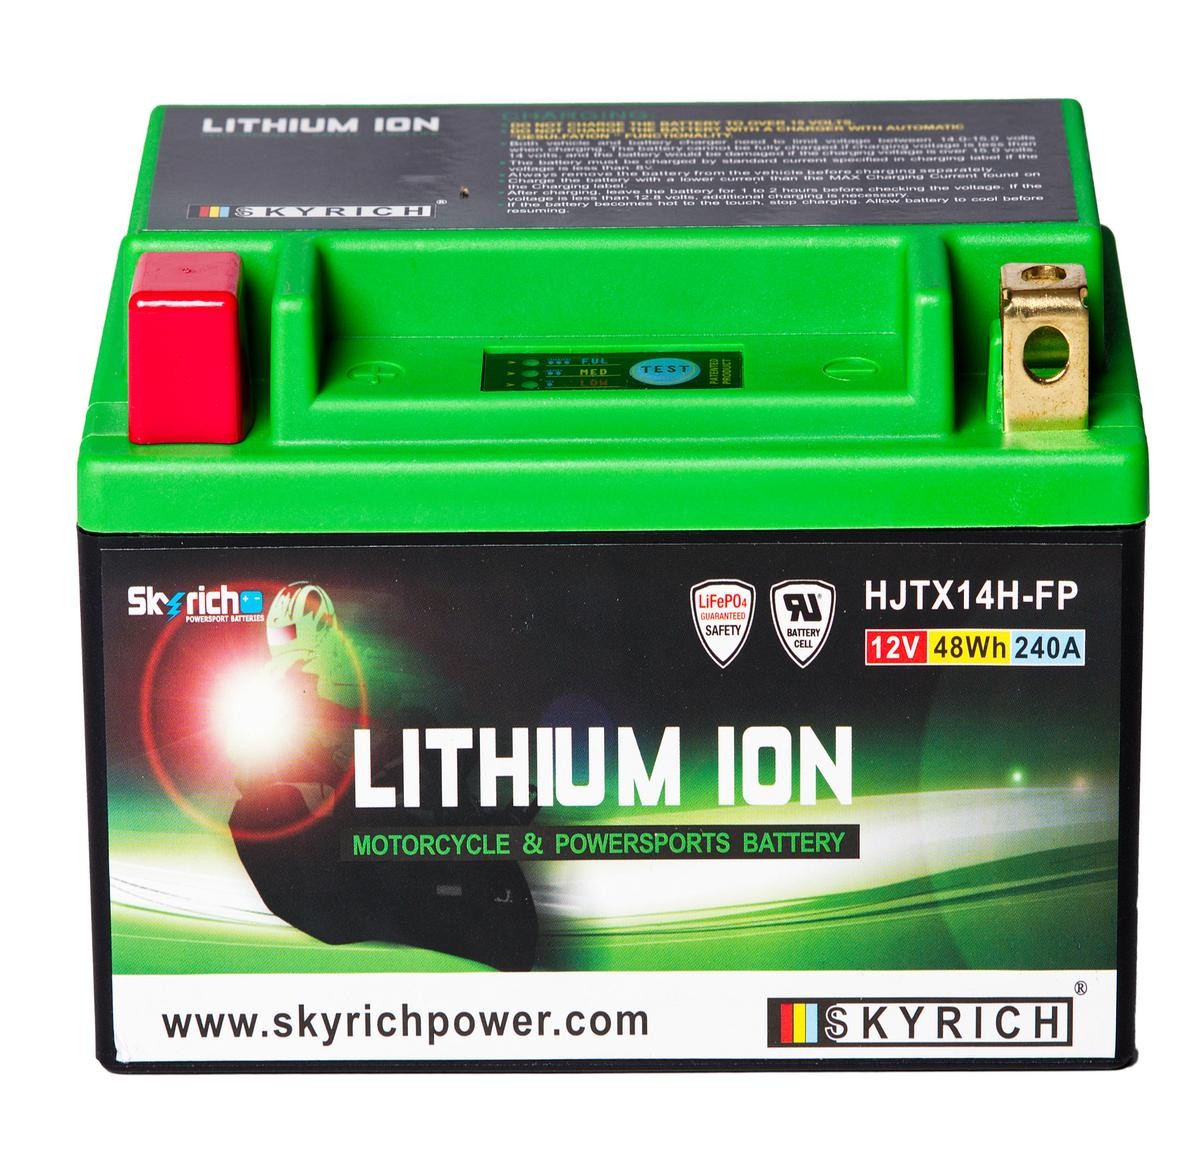 SKYRICH LITHIUM ION Batterie 12V 4Ah 240A N Li-Ionen-Batterie HJTX14H-FP KAWASAKI Mofa Maxi-Scooter